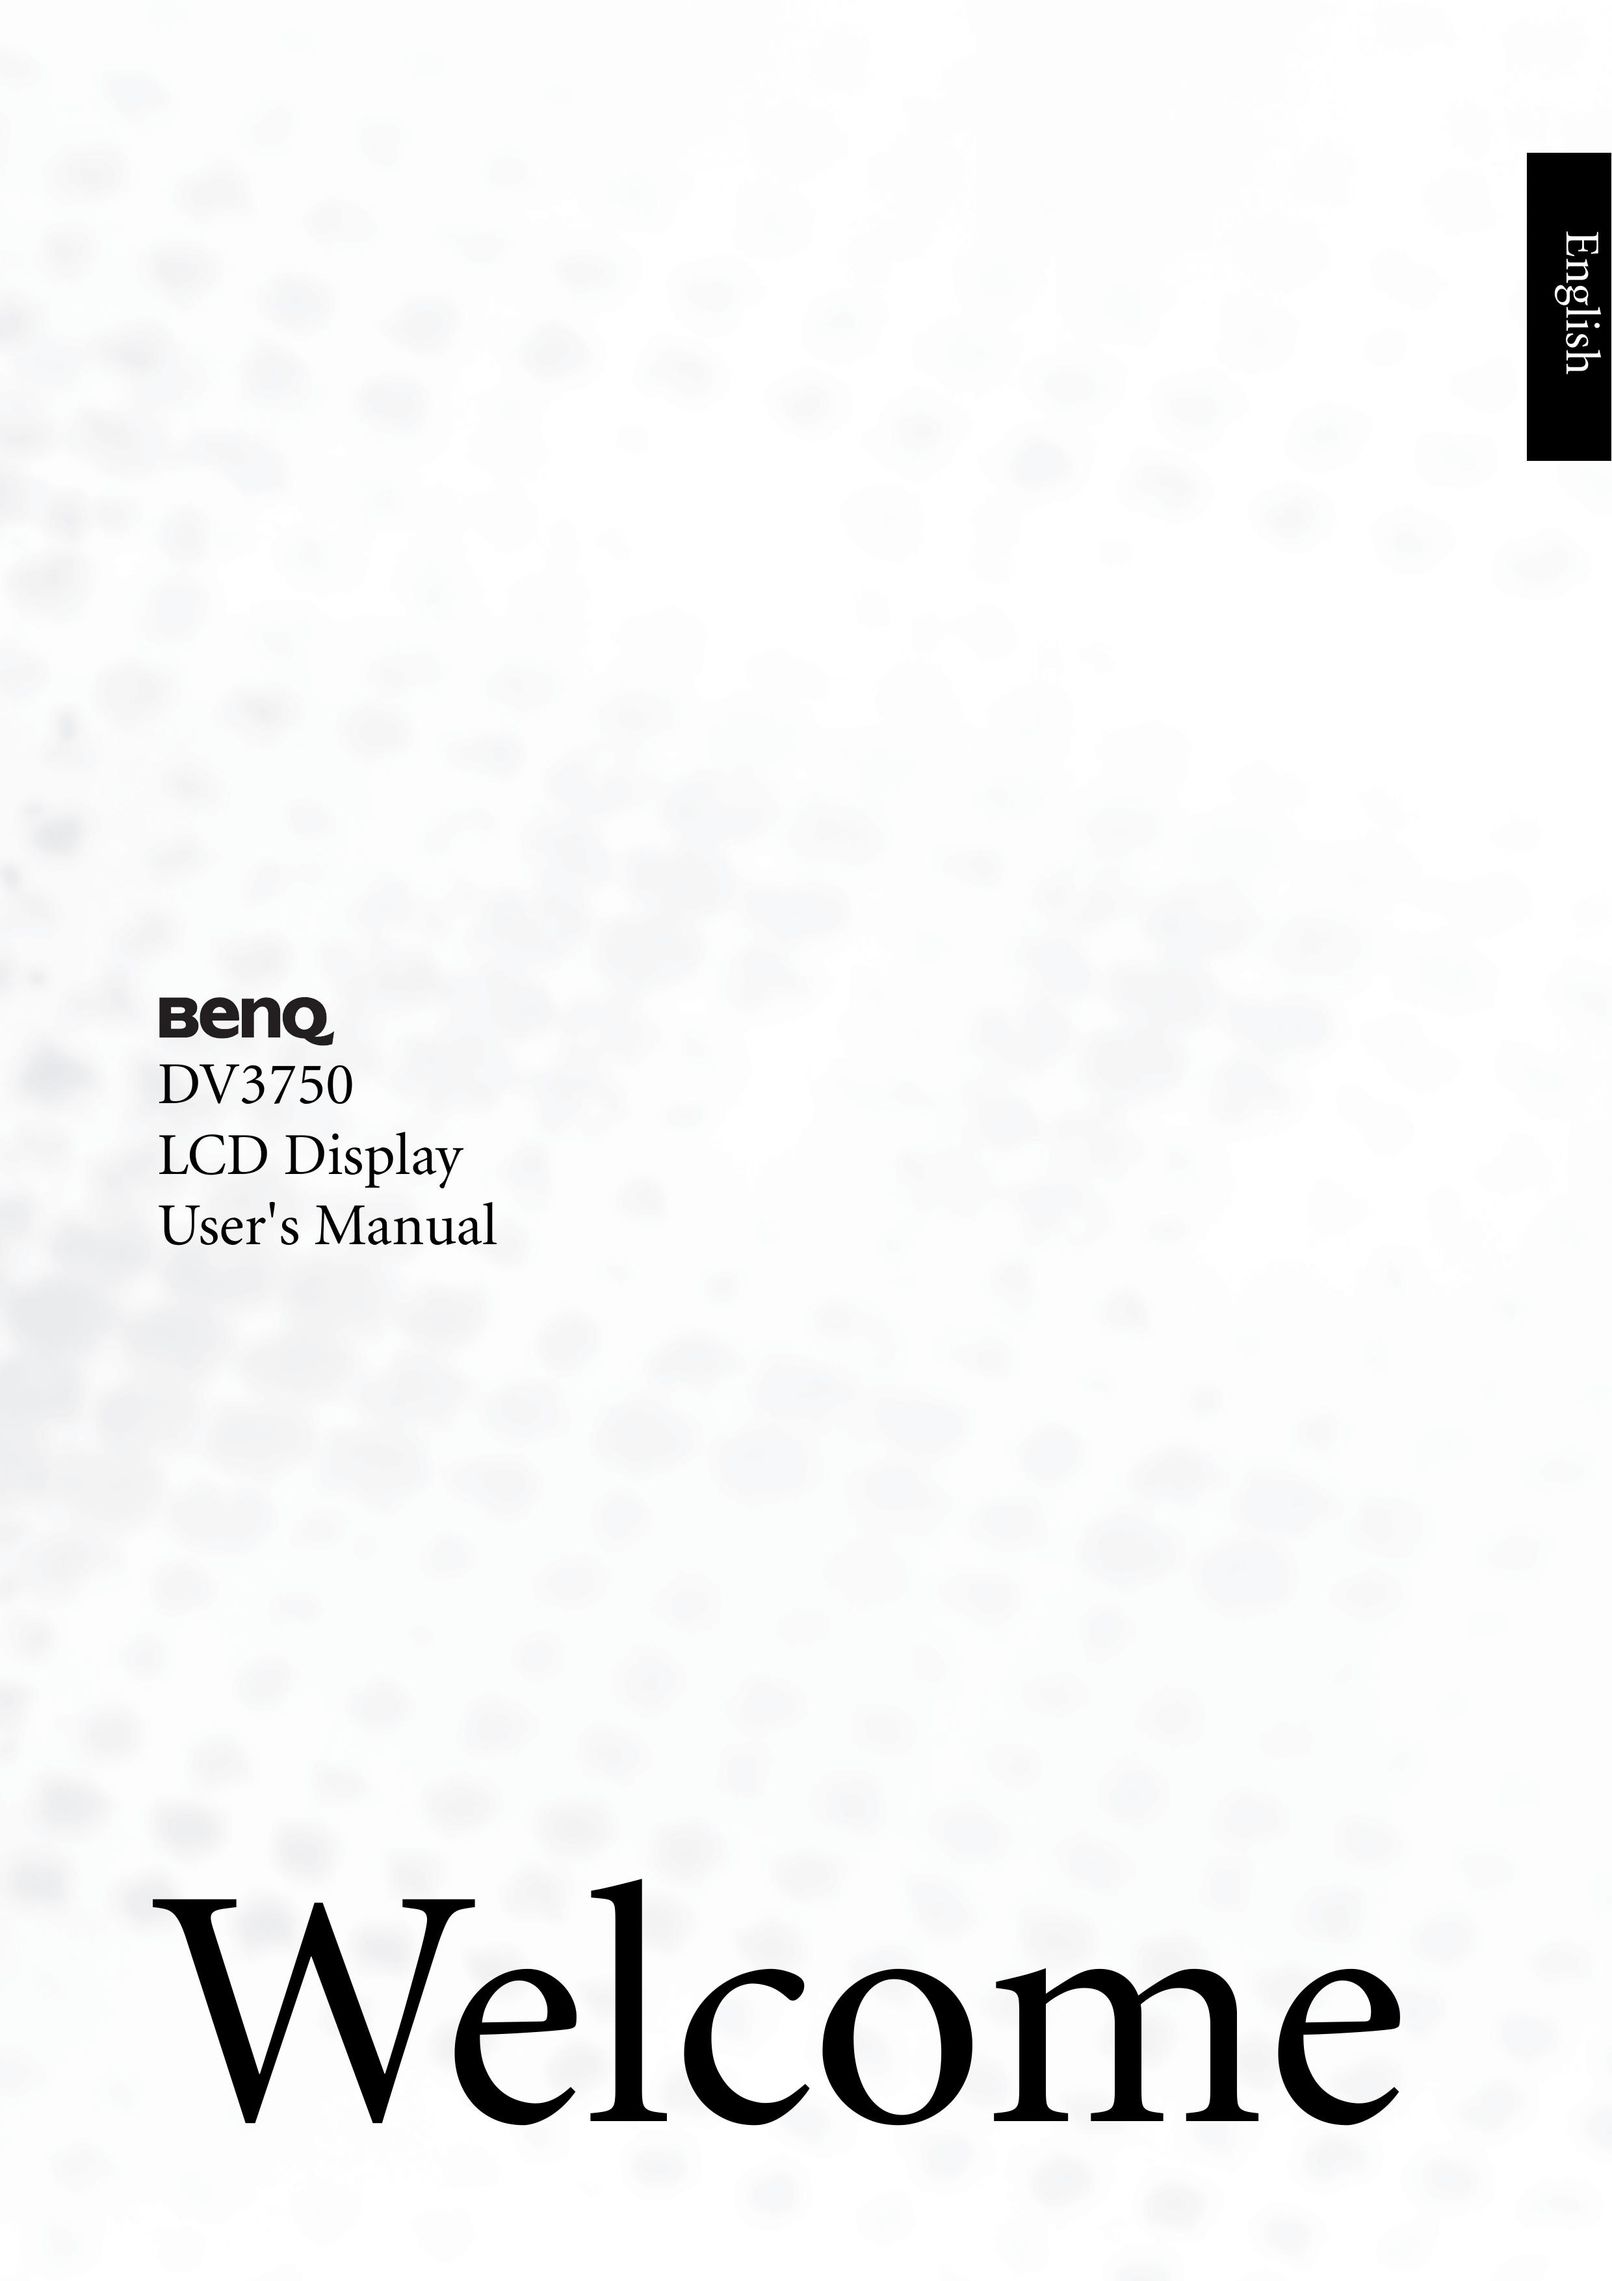 BenQ DV3750 Flat Panel Television User Manual